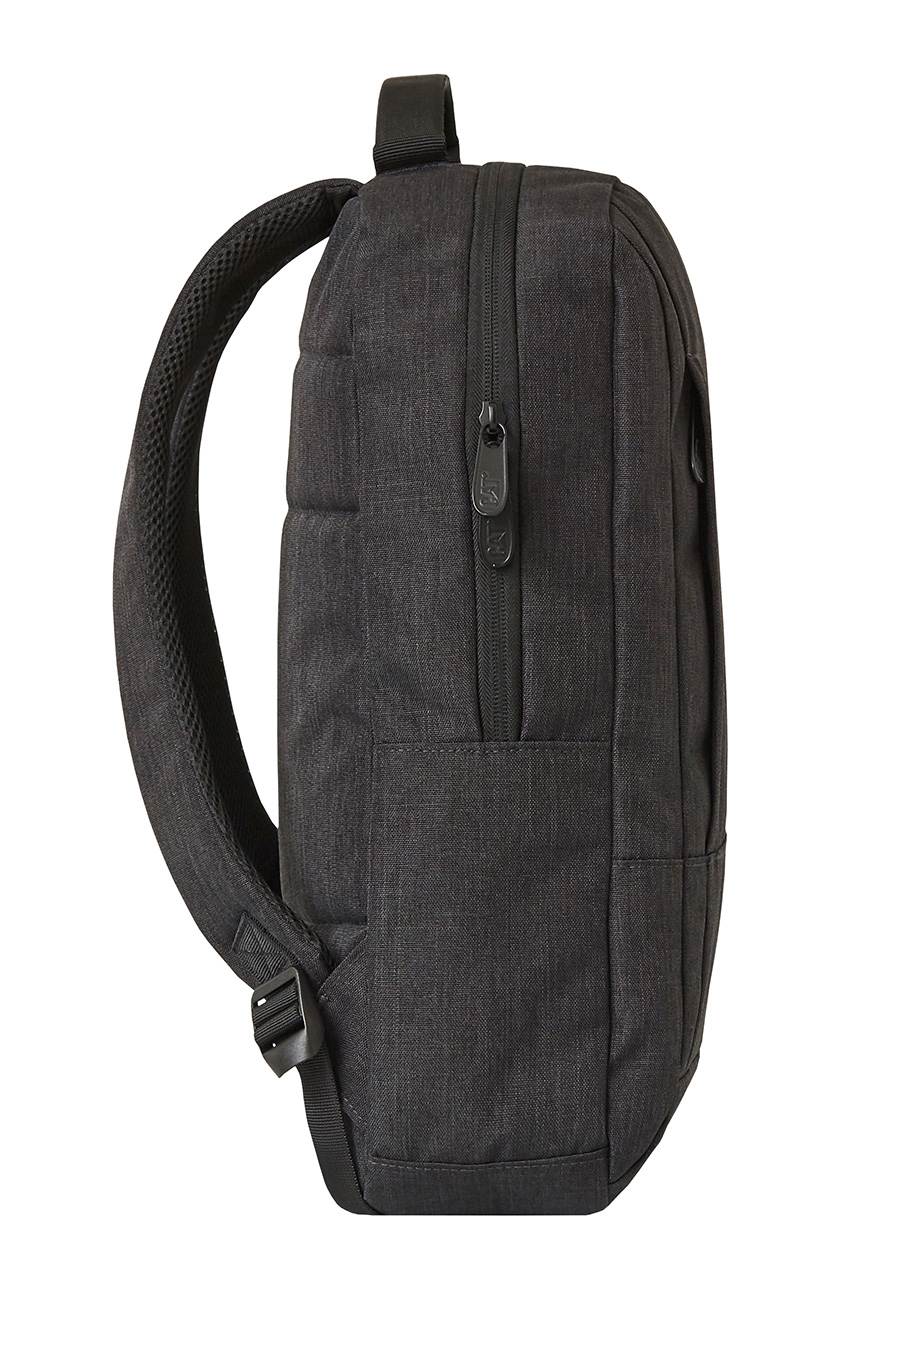 Backpack CAT 84518-122